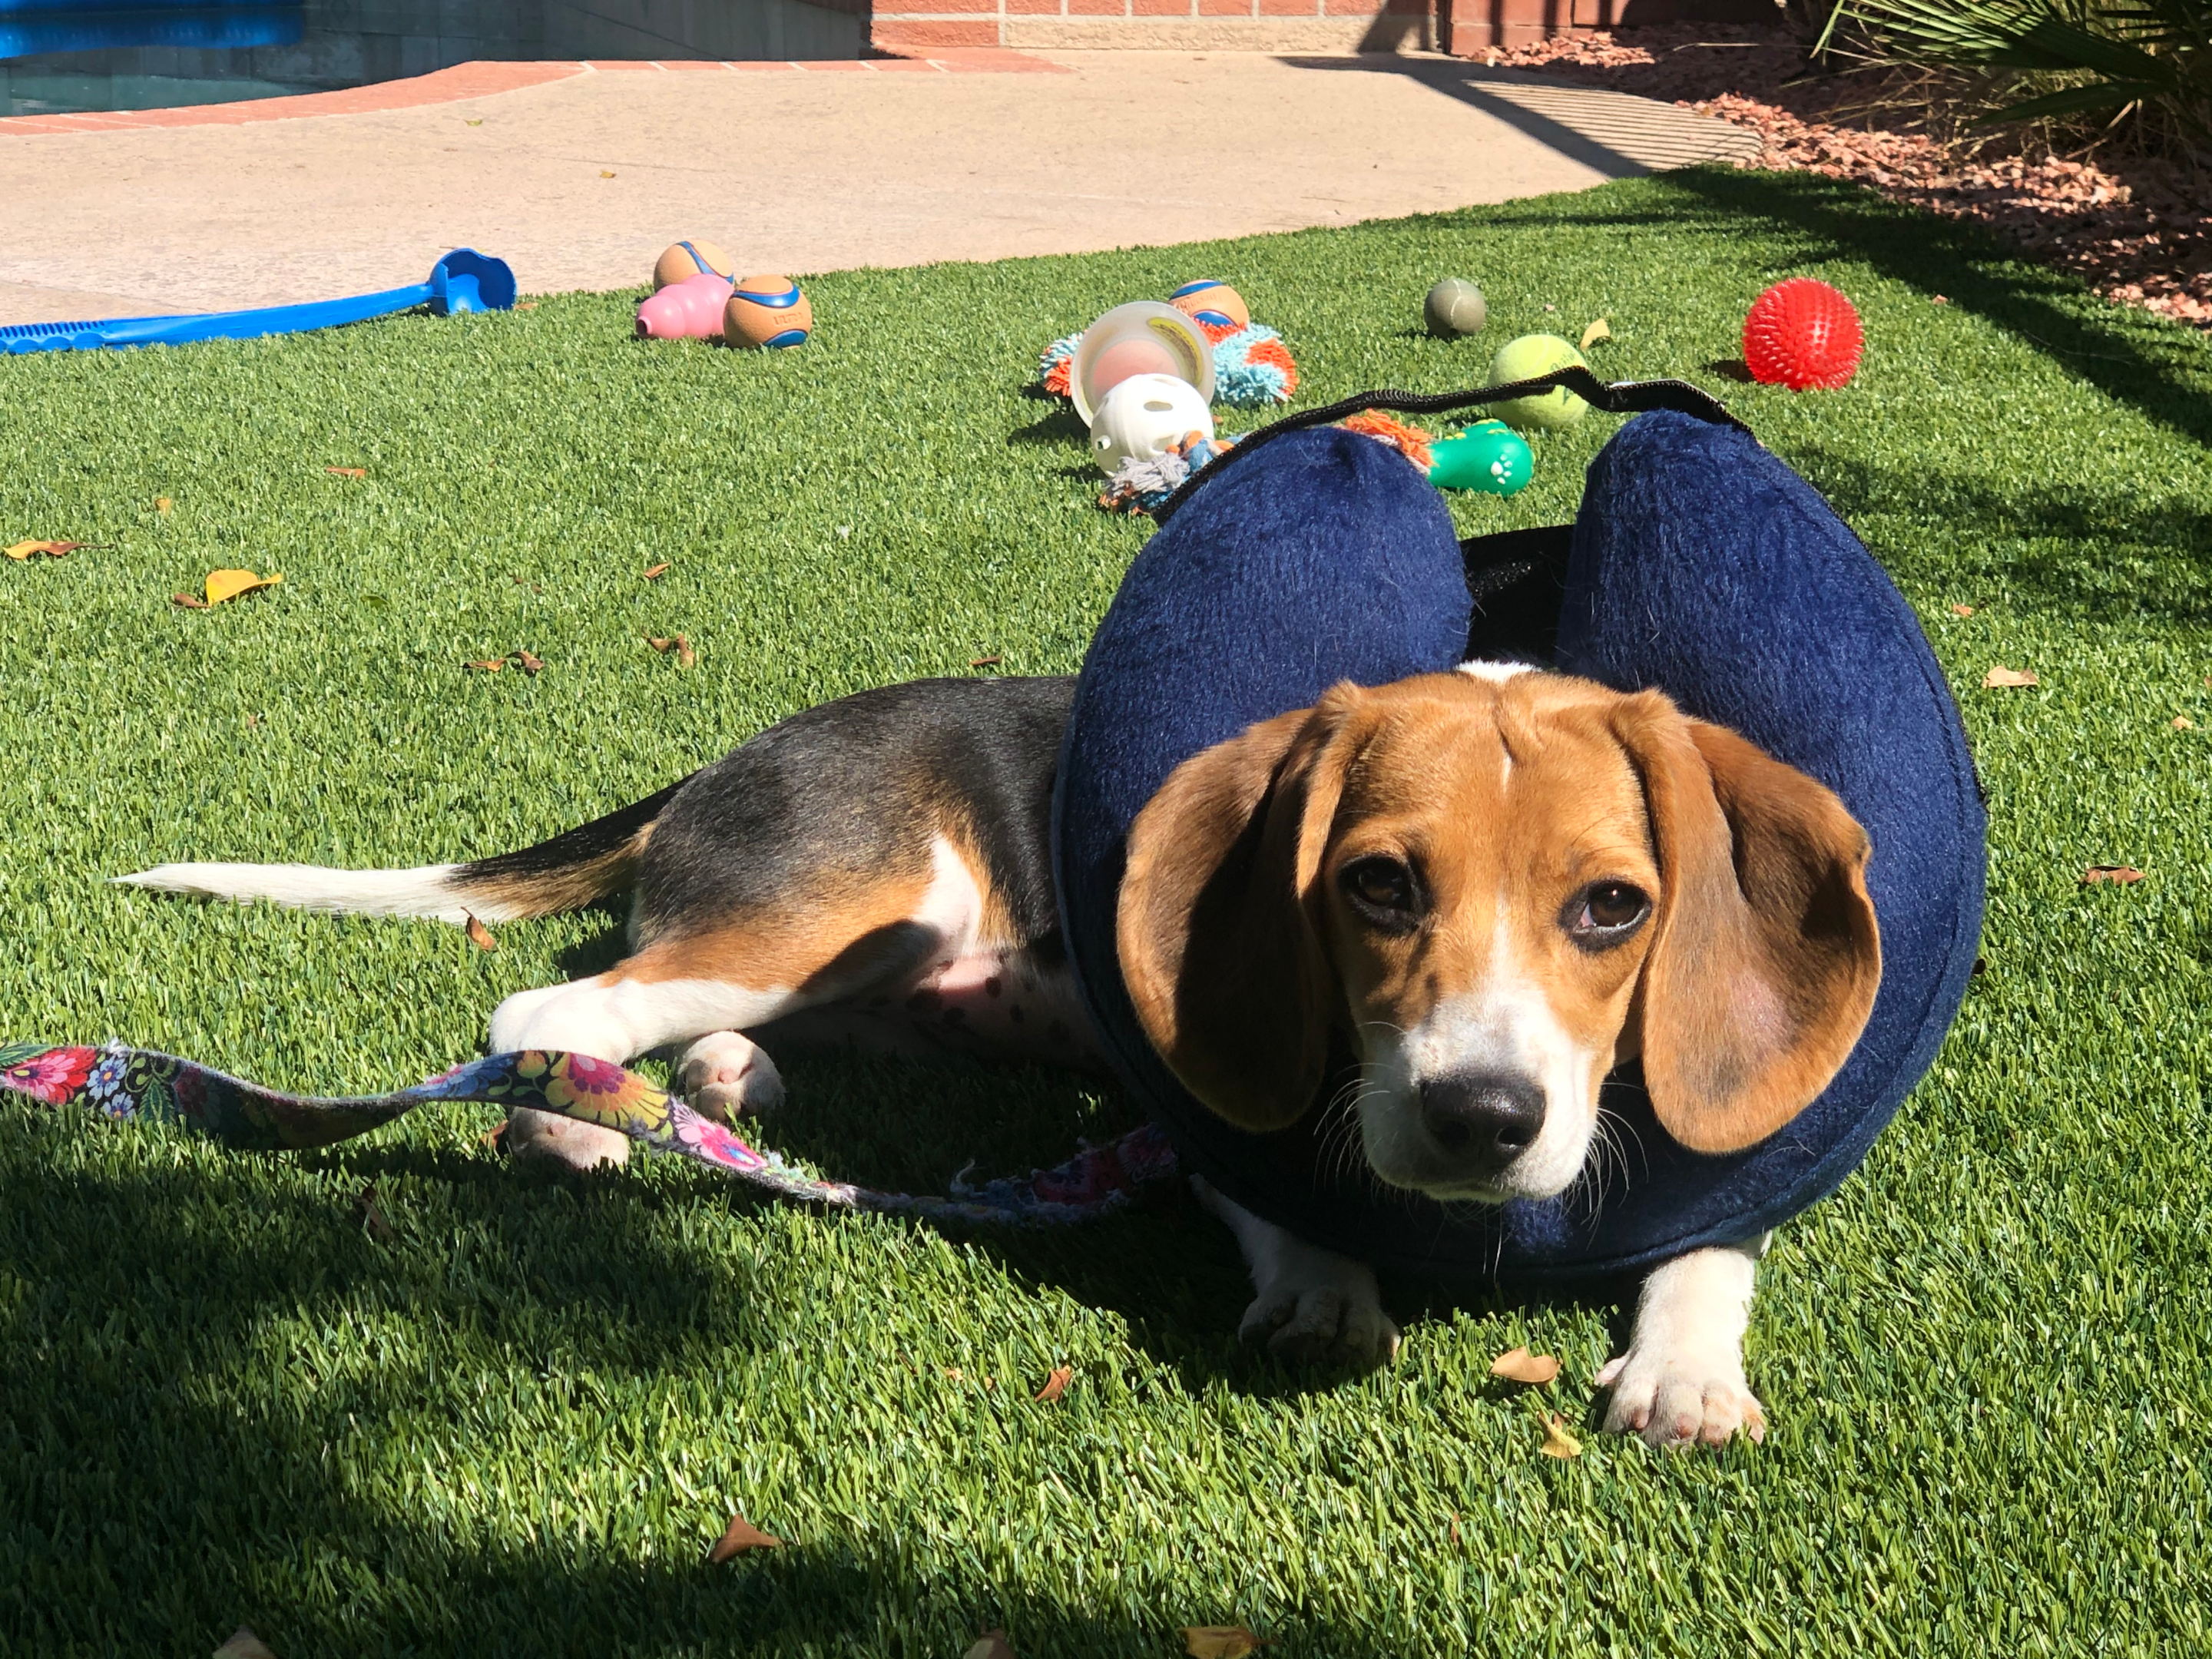 Outdoor playtime for a beagle enjoying a sunbath